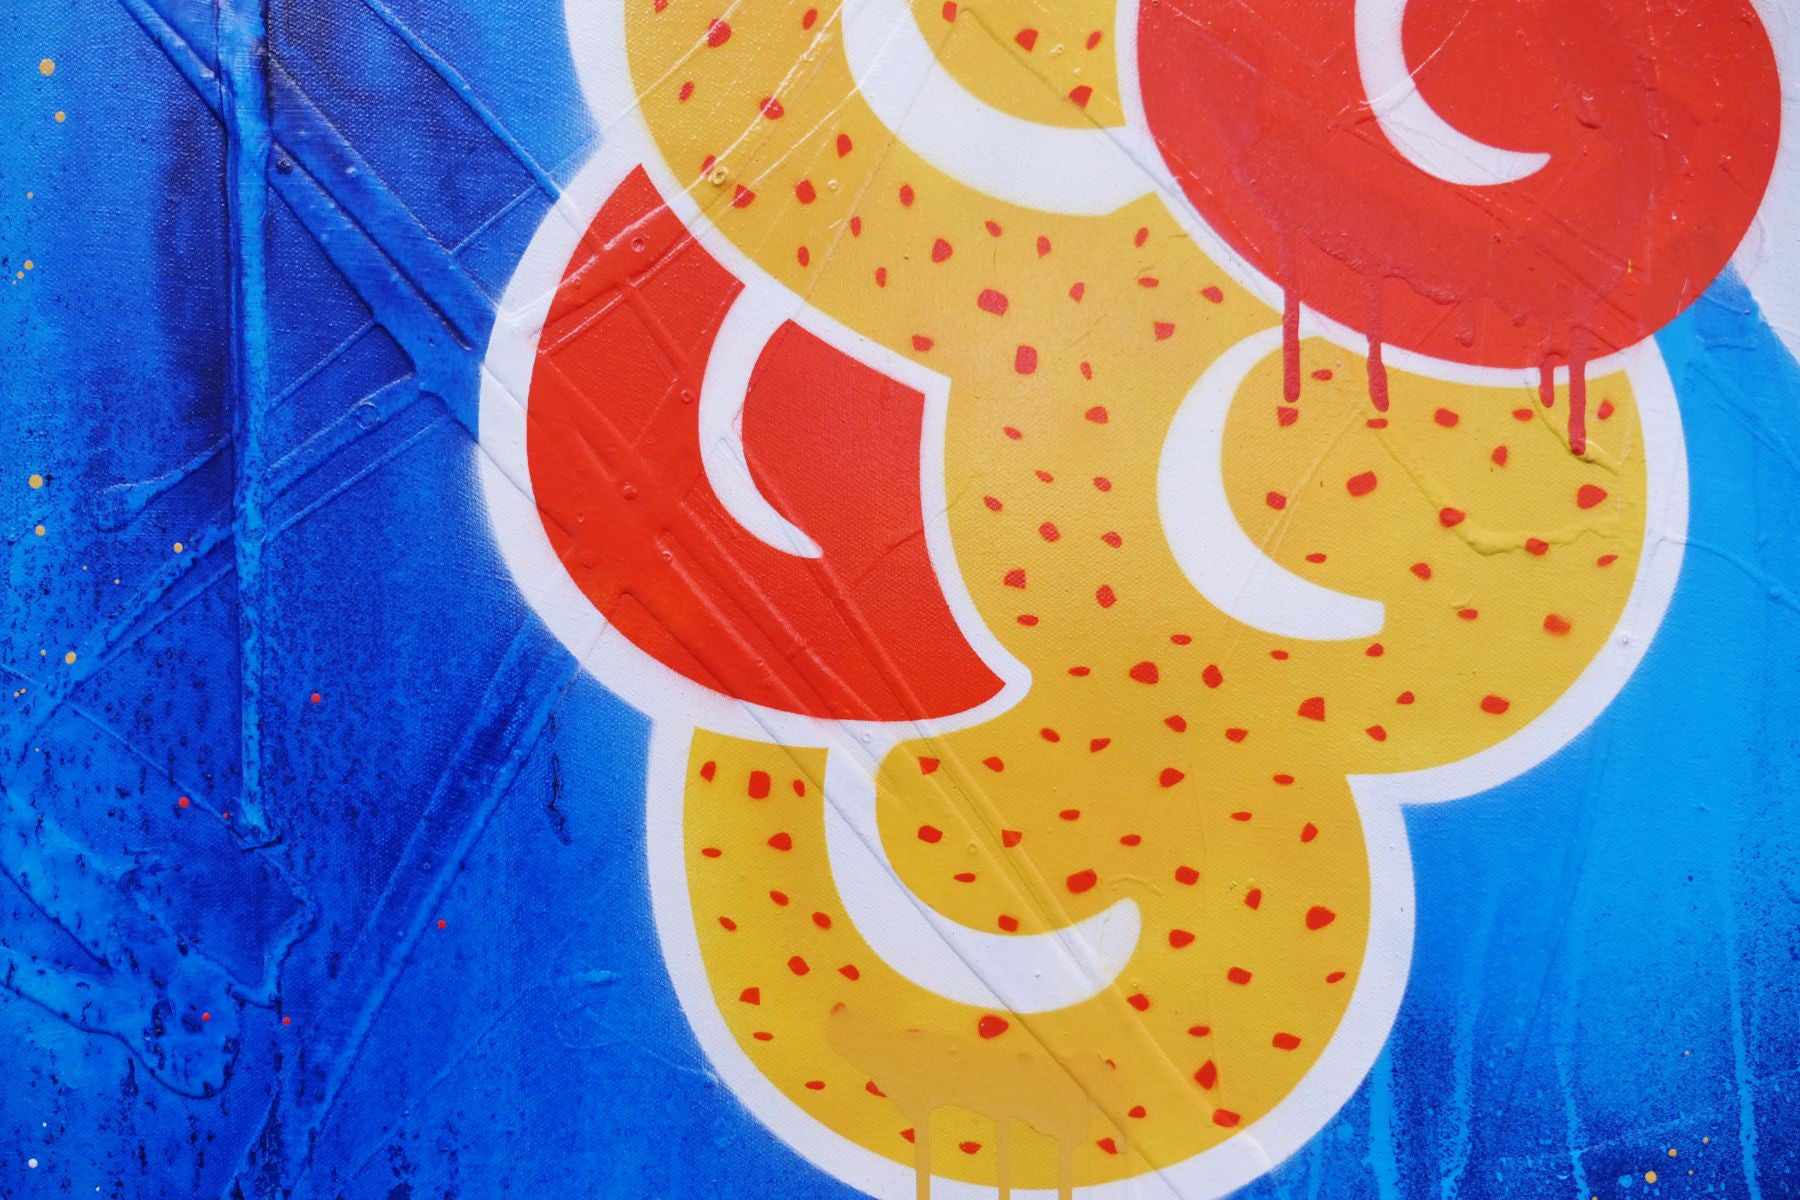 Orangina Blue 140cm x 100cm Textured Urban Pop Art Painting